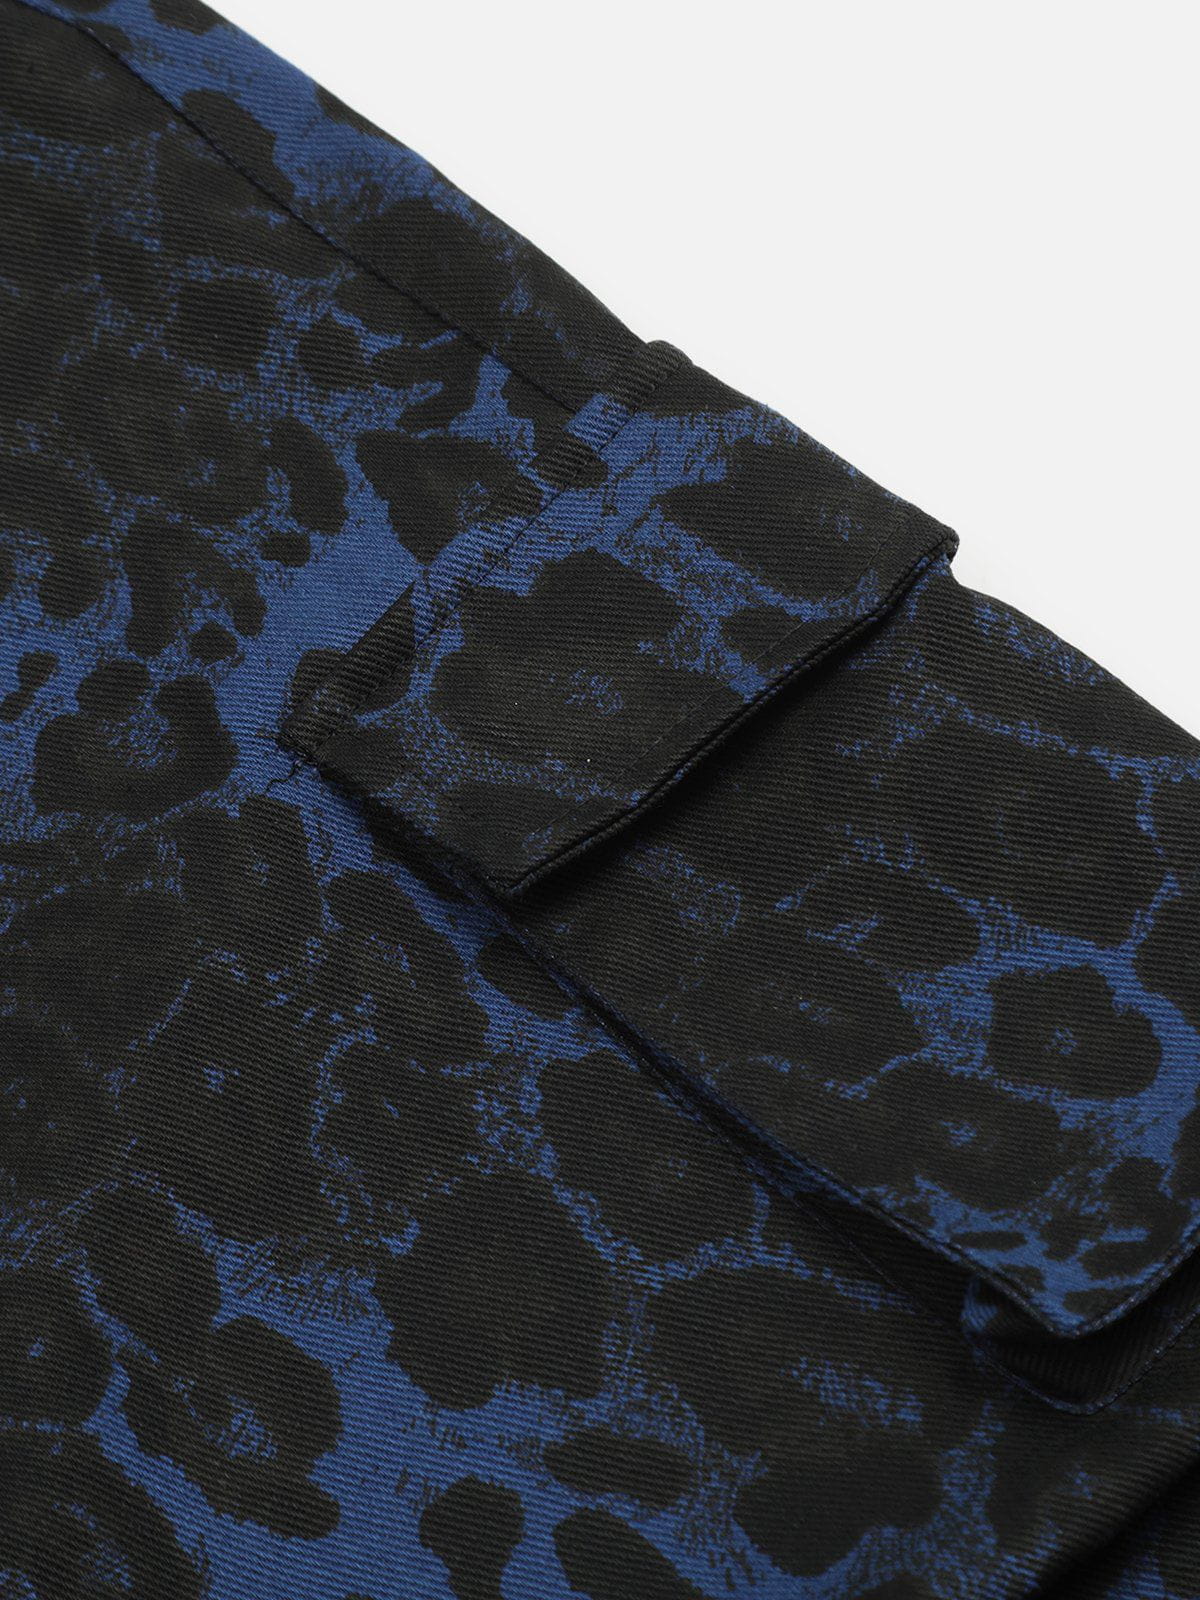 Aelfric Eden Blue Leopard Print Cargo Pants